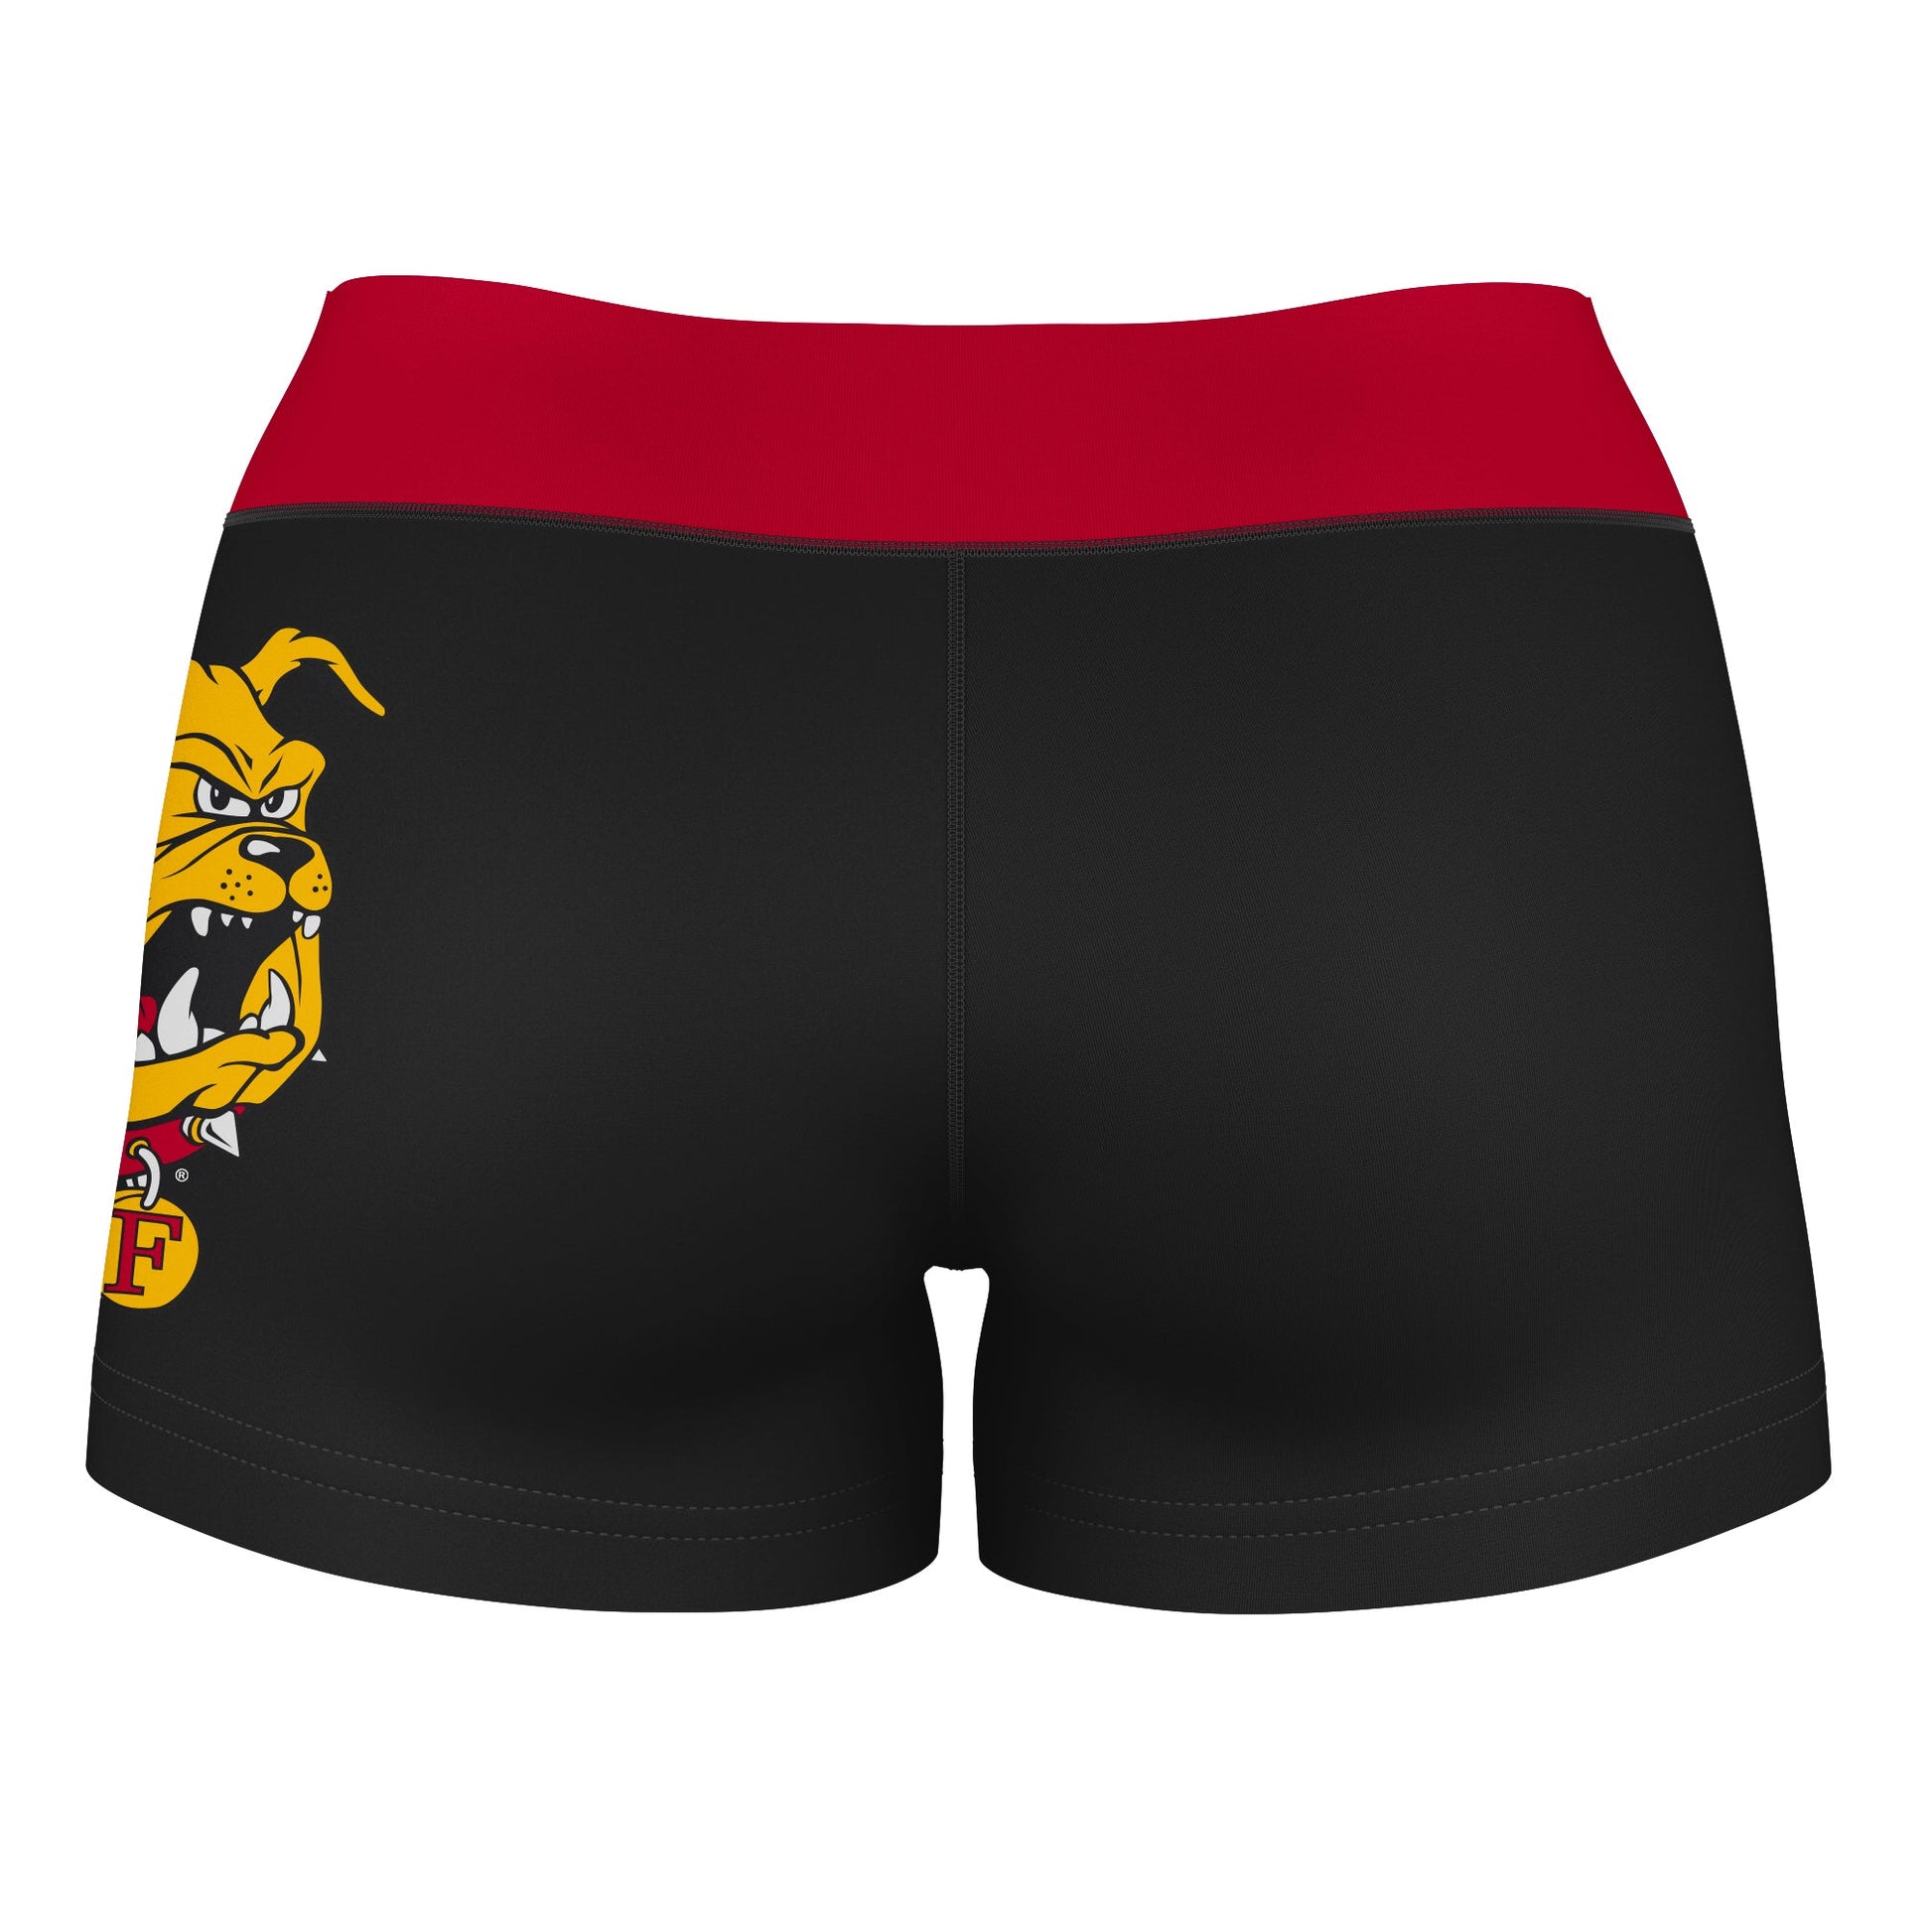 Ferris State Bulldogs Vive La Fete Logo on Thigh & Waistband Black Red Women Yoga Booty Workout Shorts 3.75 Inseam - Vive La F̻te - Online Apparel Store